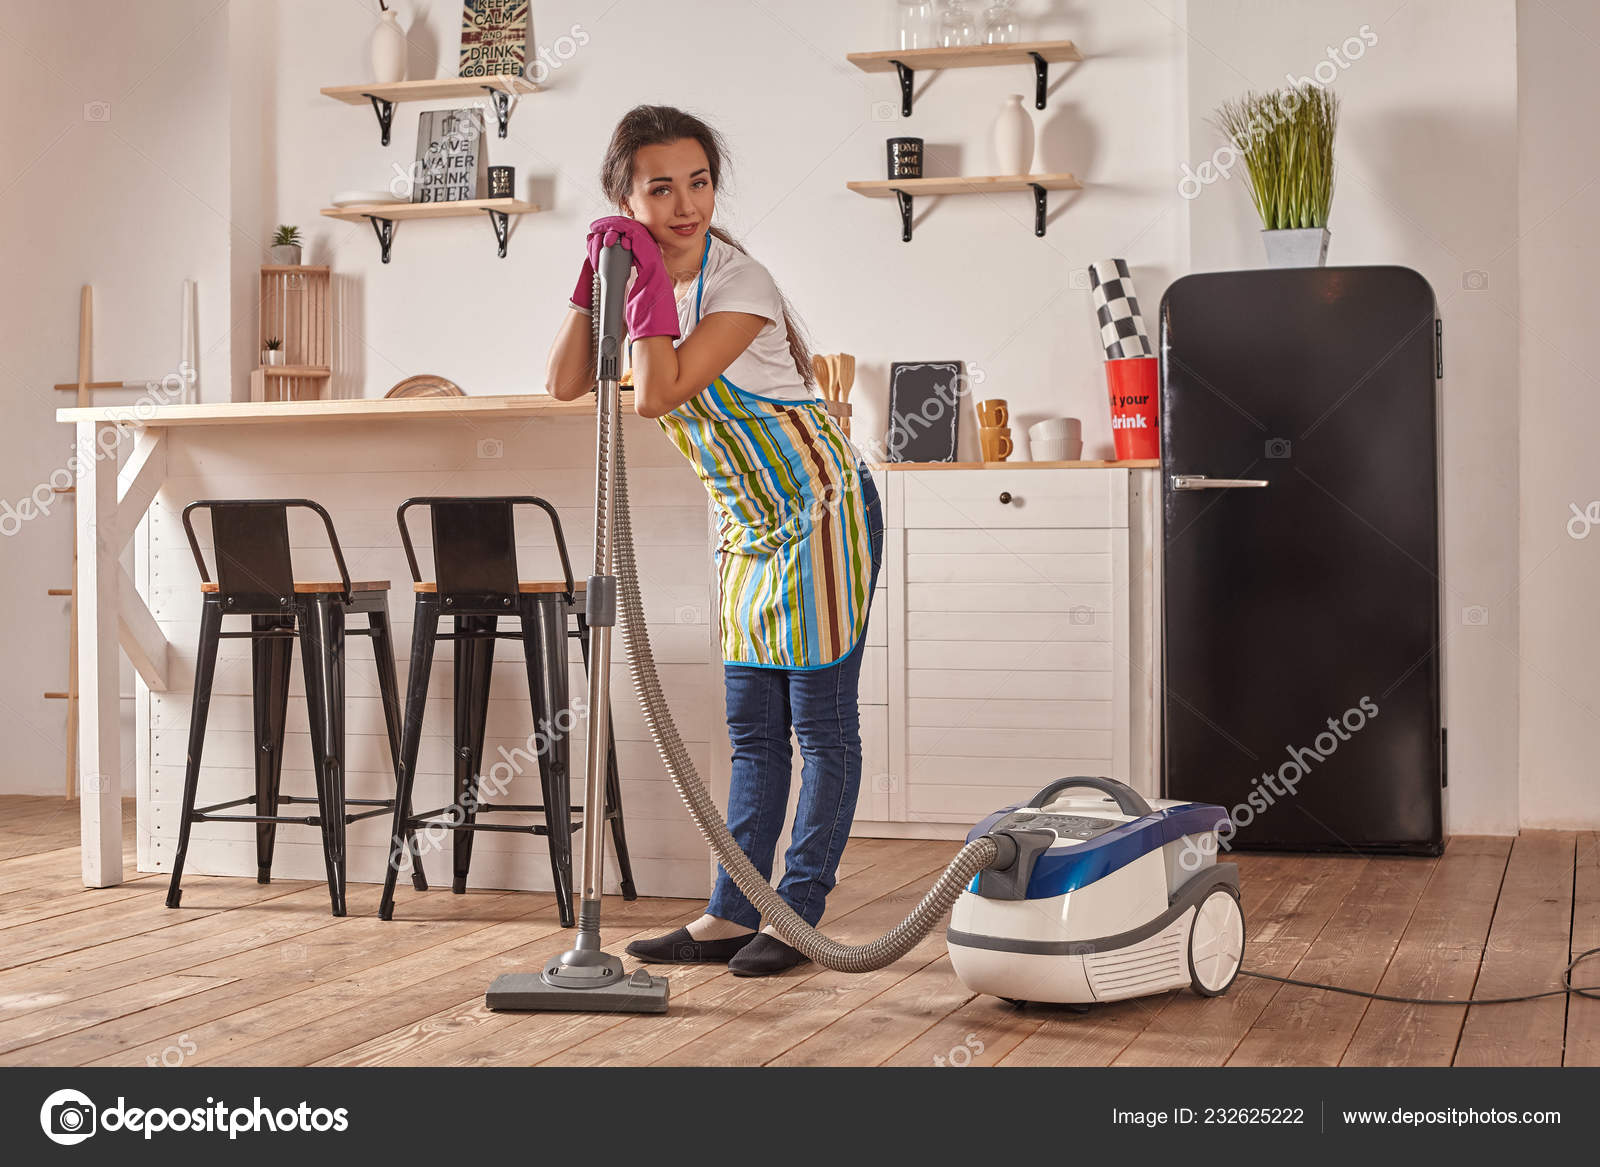 https://st4.depositphotos.com/5954192/23262/i/1600/depositphotos_232625222-stock-photo-young-woman-using-vacuum-cleaner.jpg